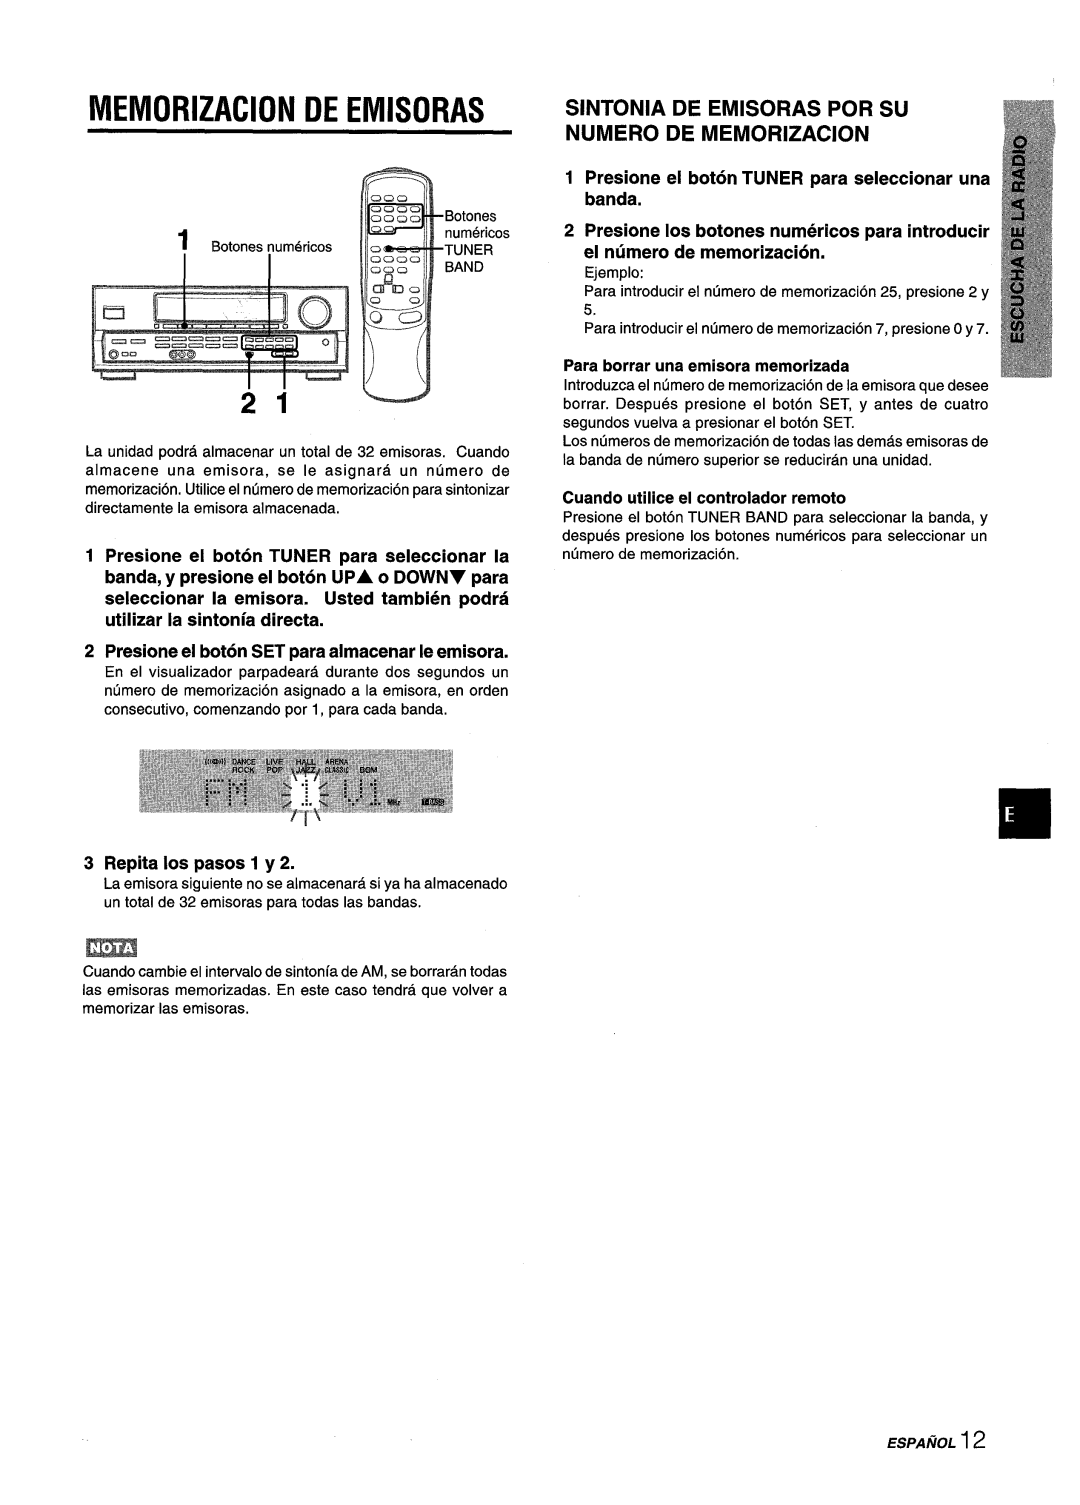 Aiwa AV-D25 manual Memorization De Emisoras, Sintonia De Emisoras Por Su Numero De Memorization, Repita Ios pasos 1 y 